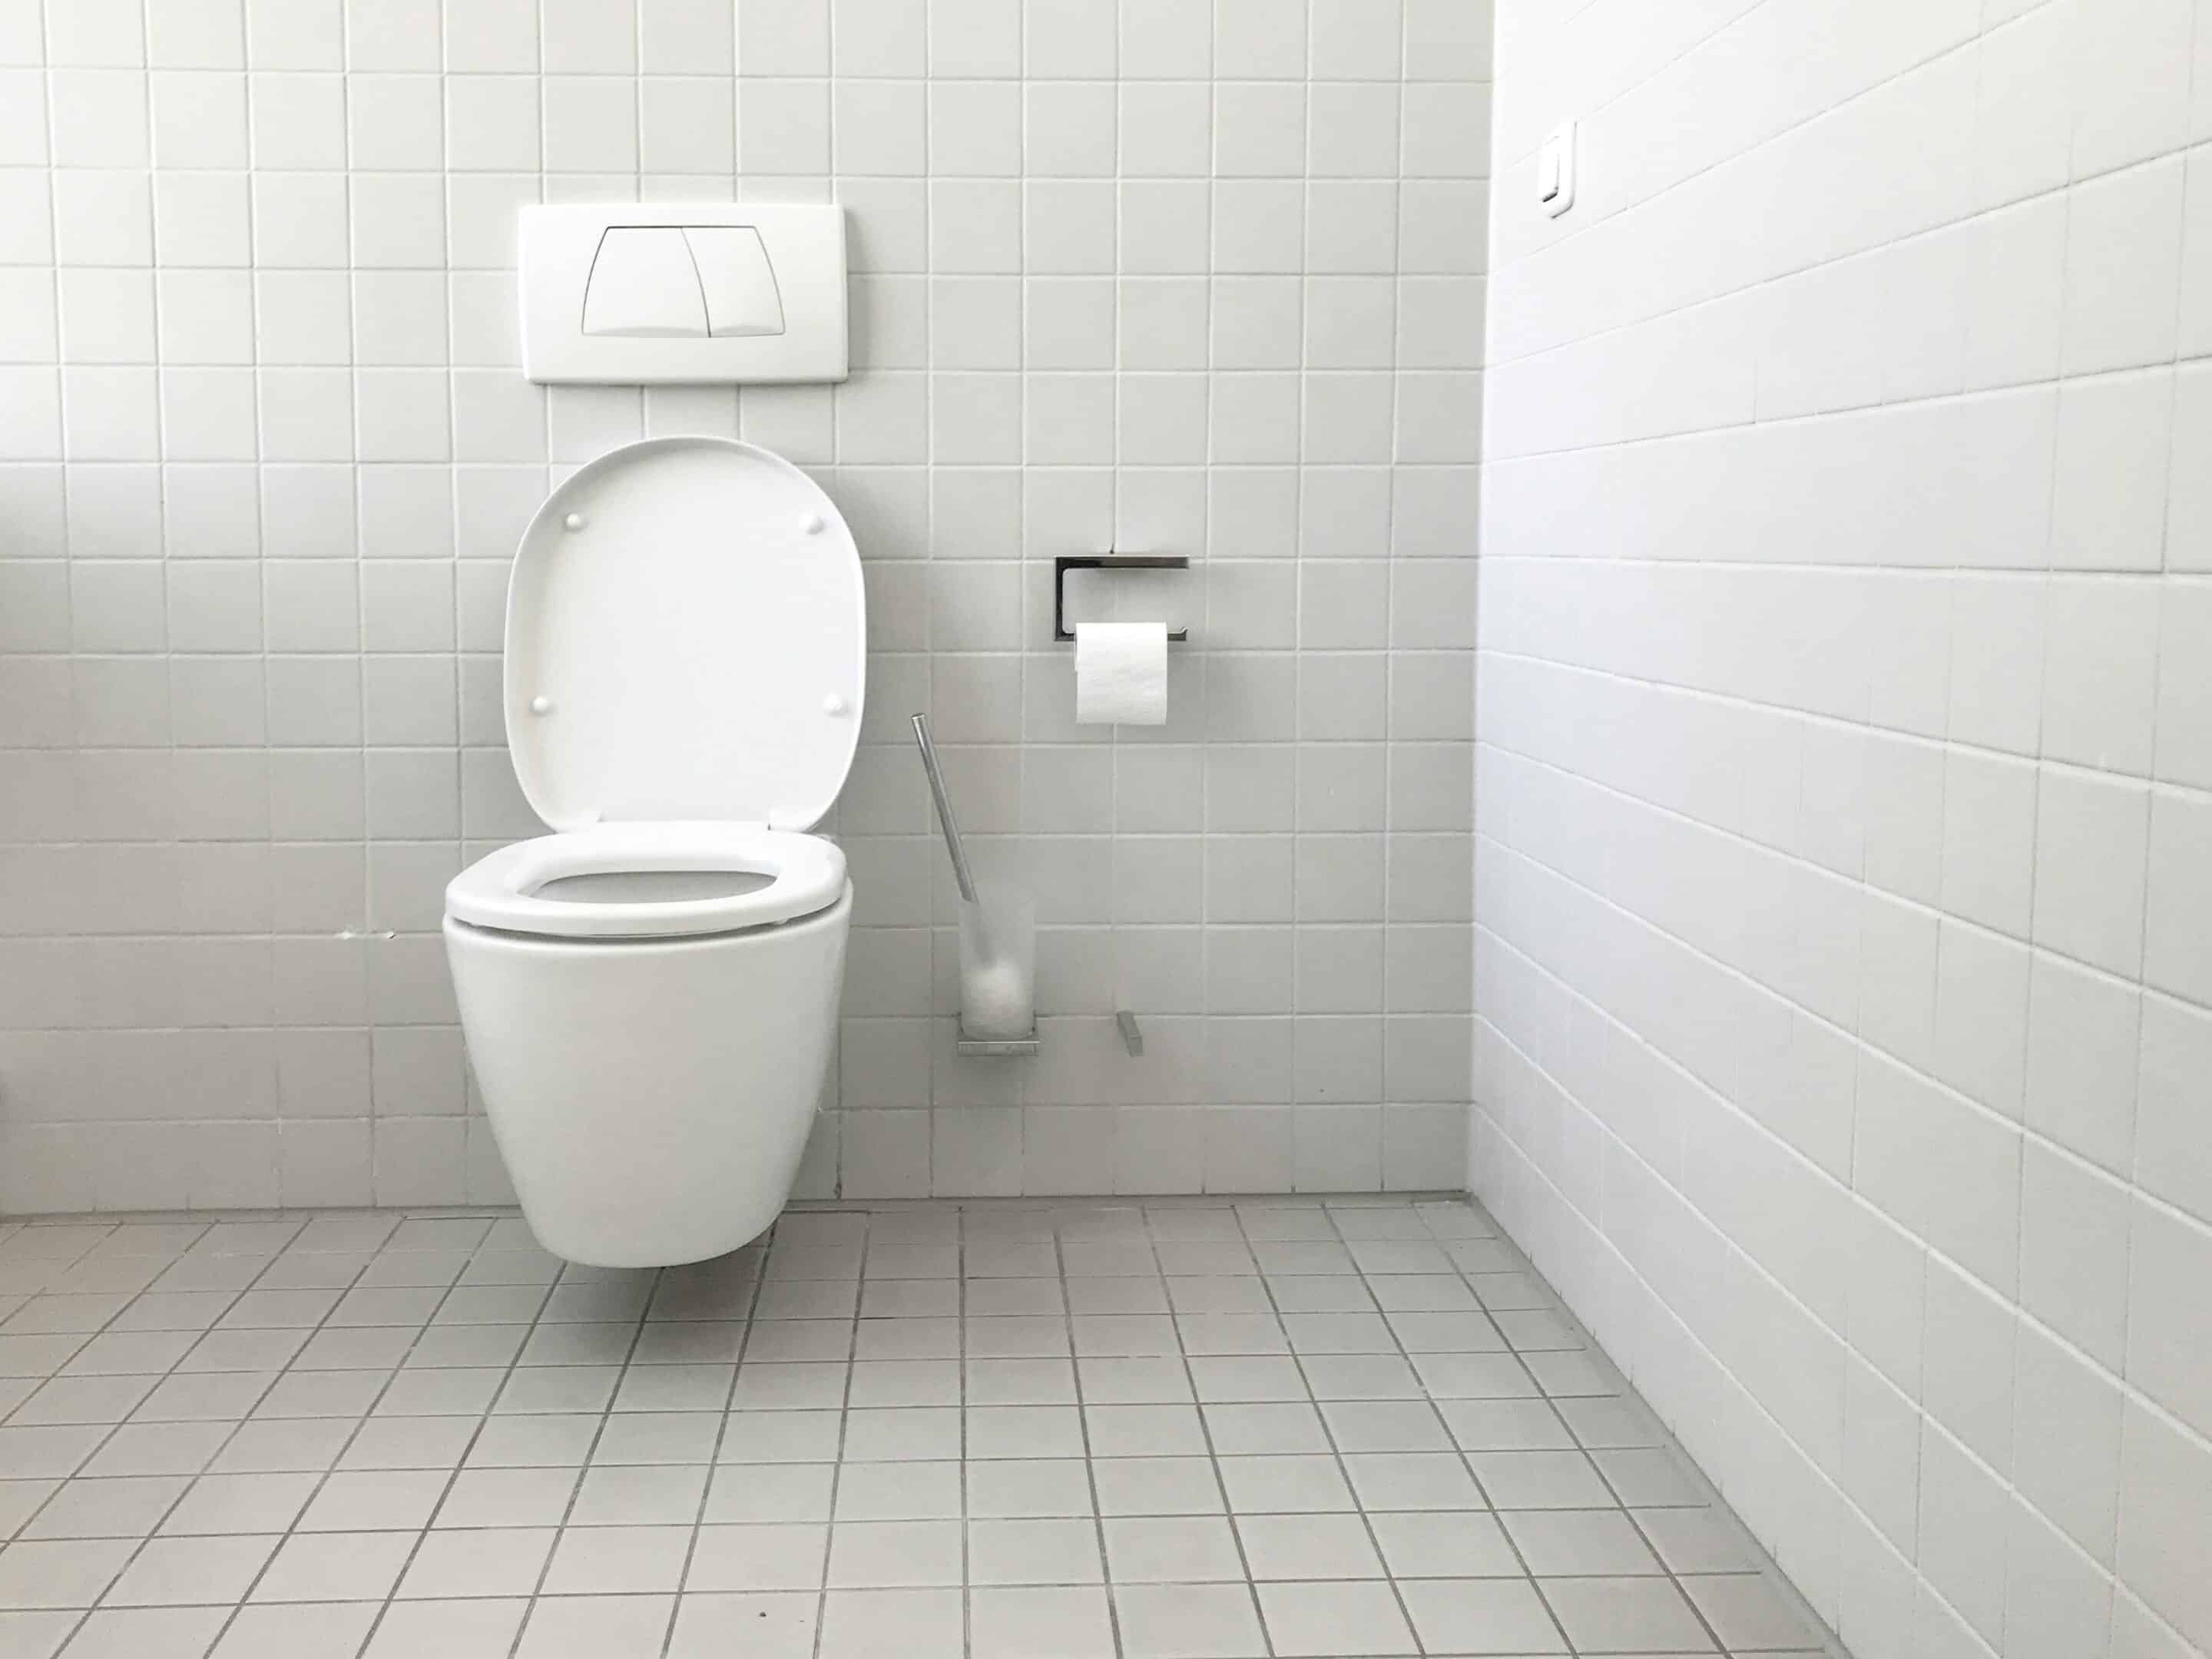 Toilettes (c) Unsplash